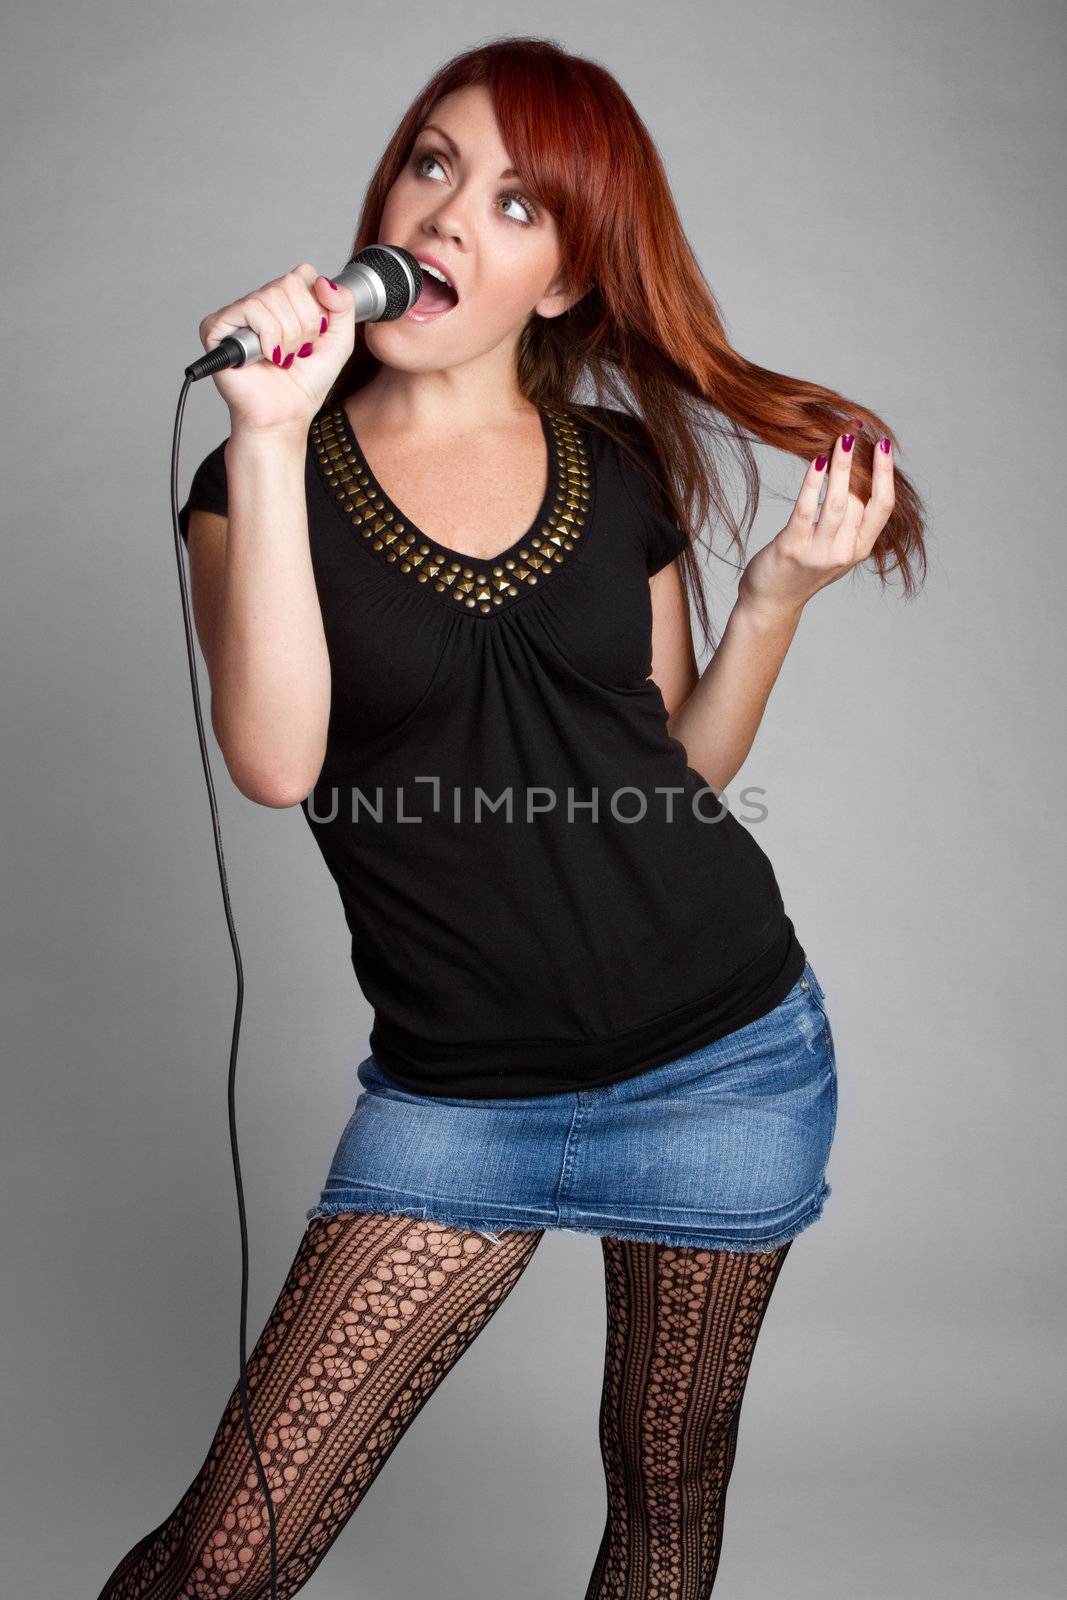 Beautiful redhead woman singing karaoke